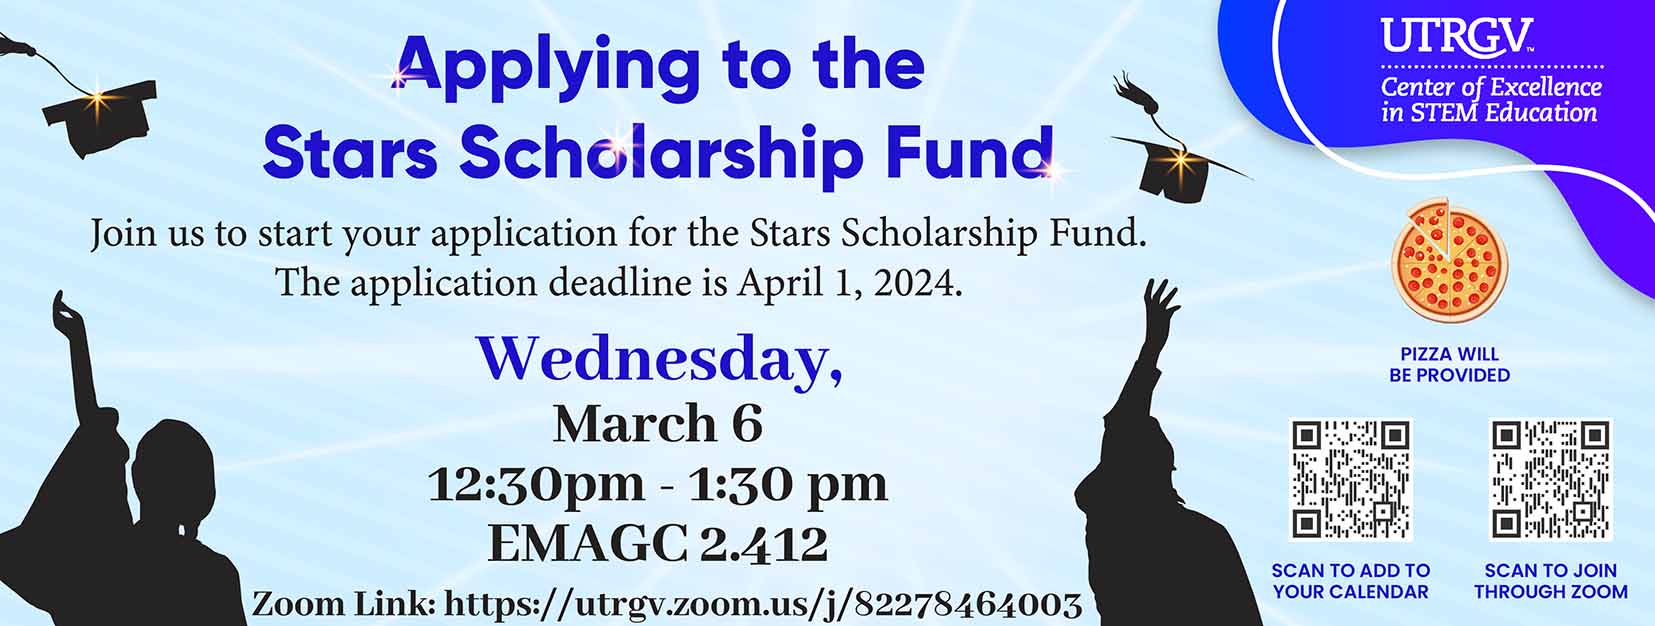 applying to the stars scholarship fund